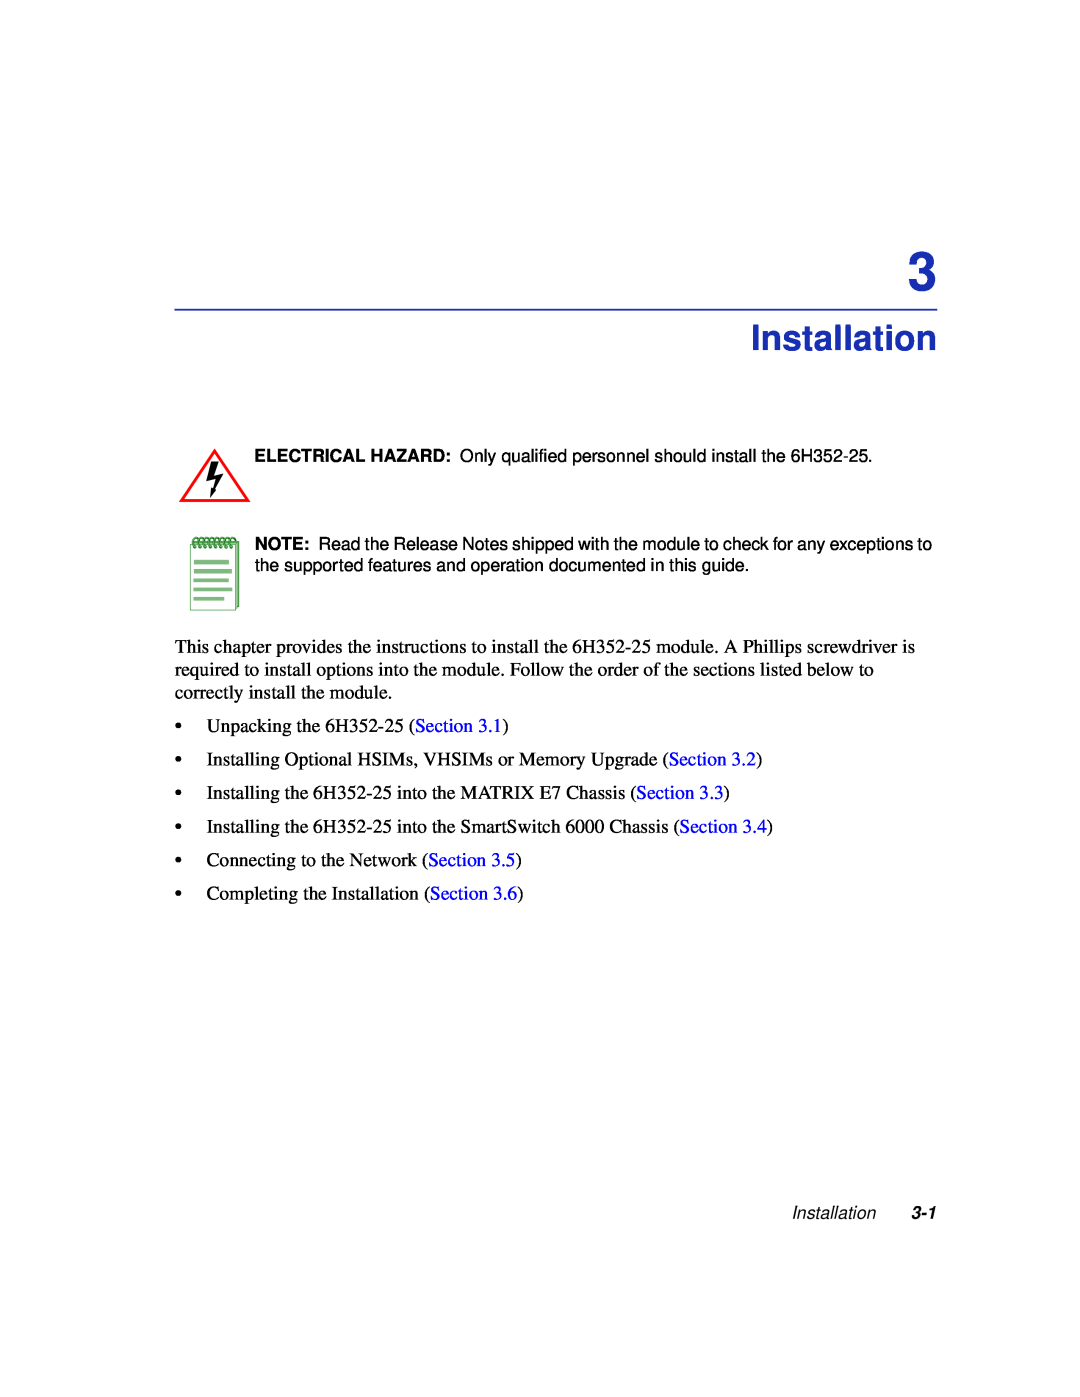 Enterasys Networks 6H352-25 manual Installation 